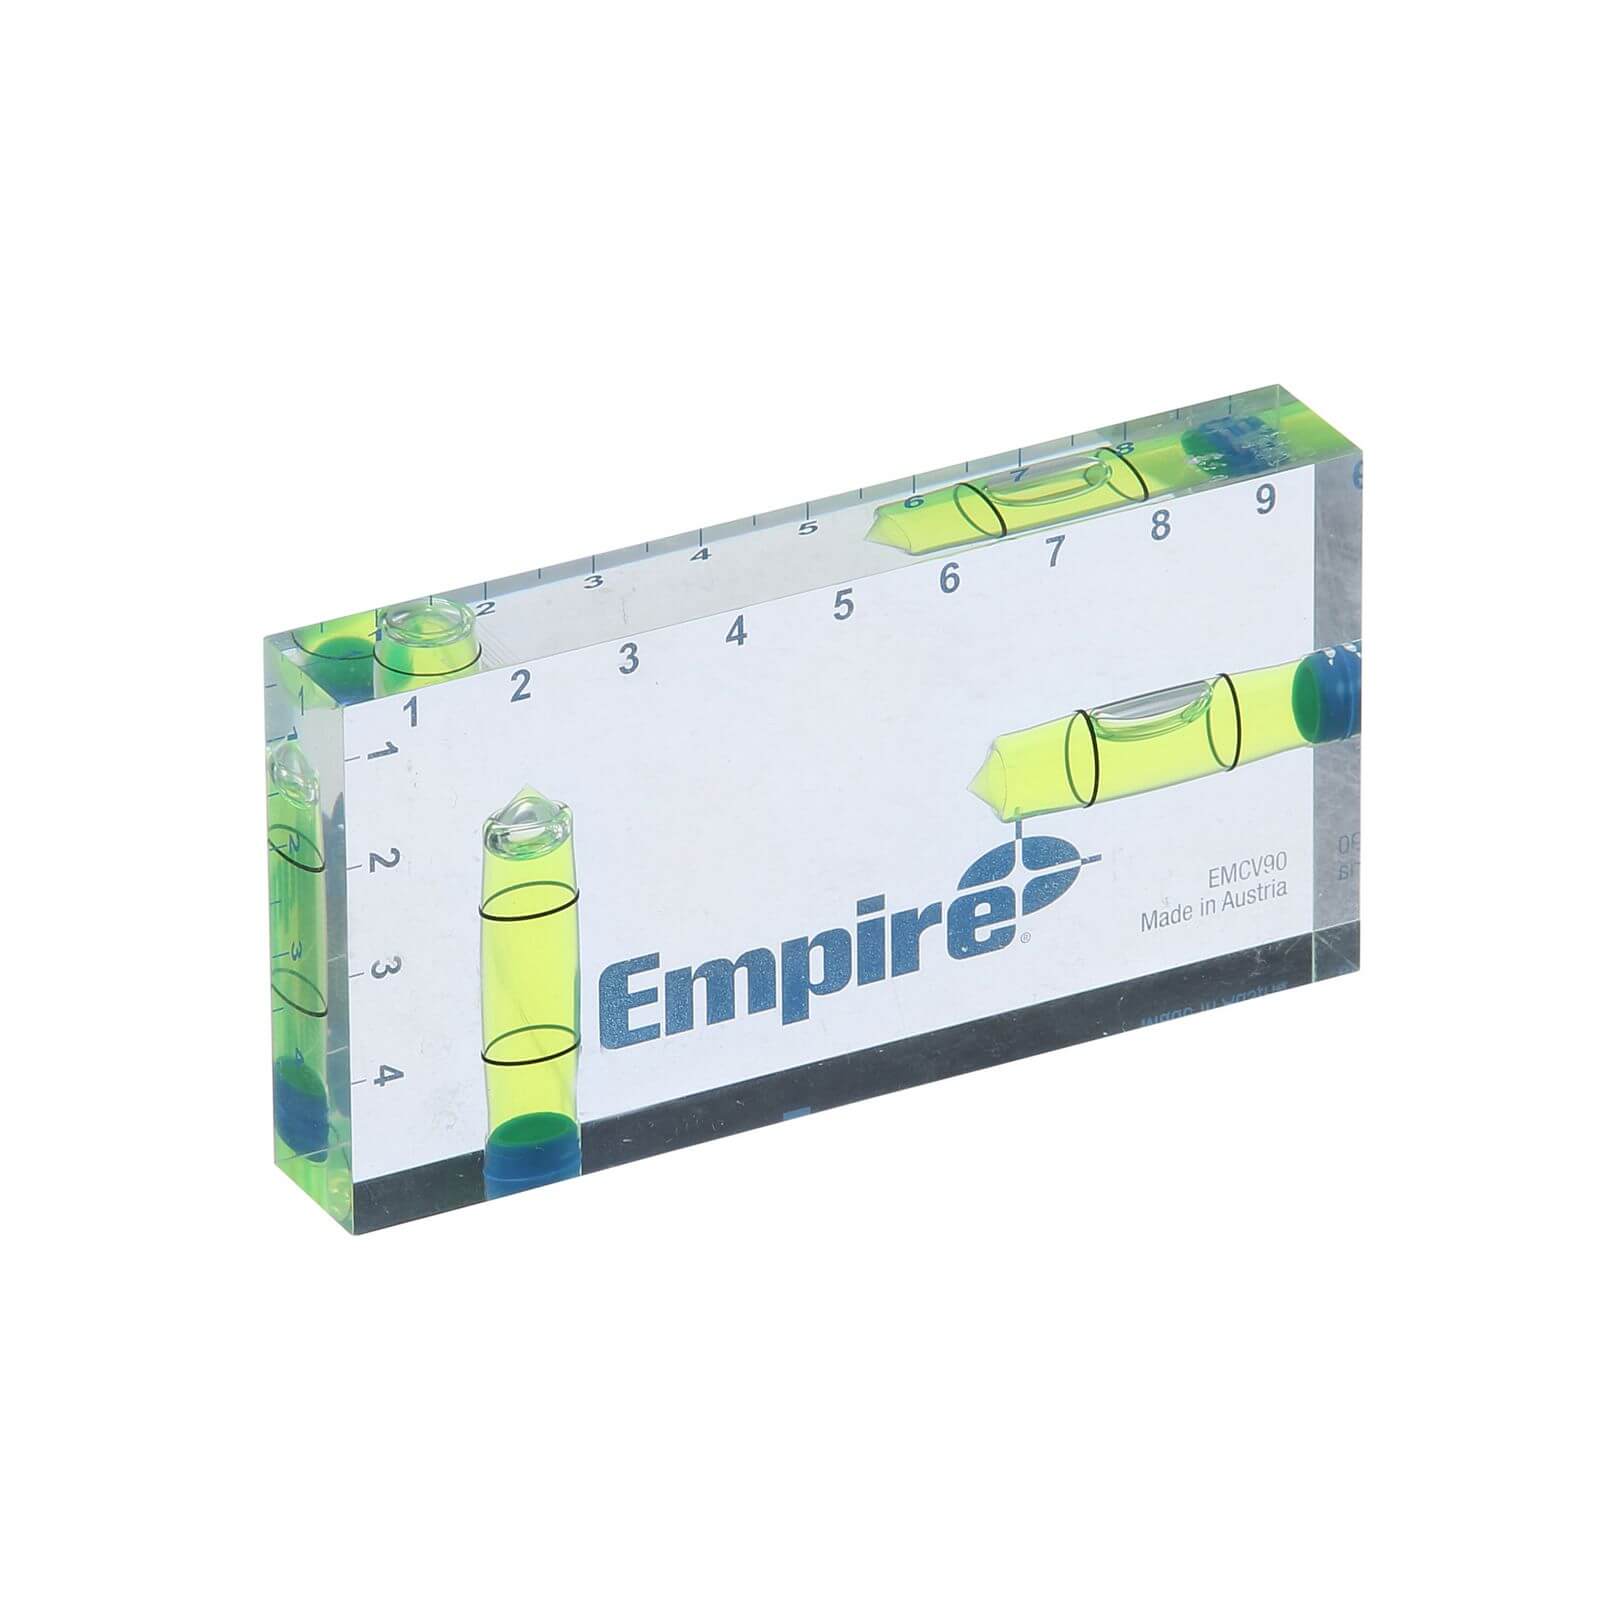 Empire EMCV90 Pocket Level